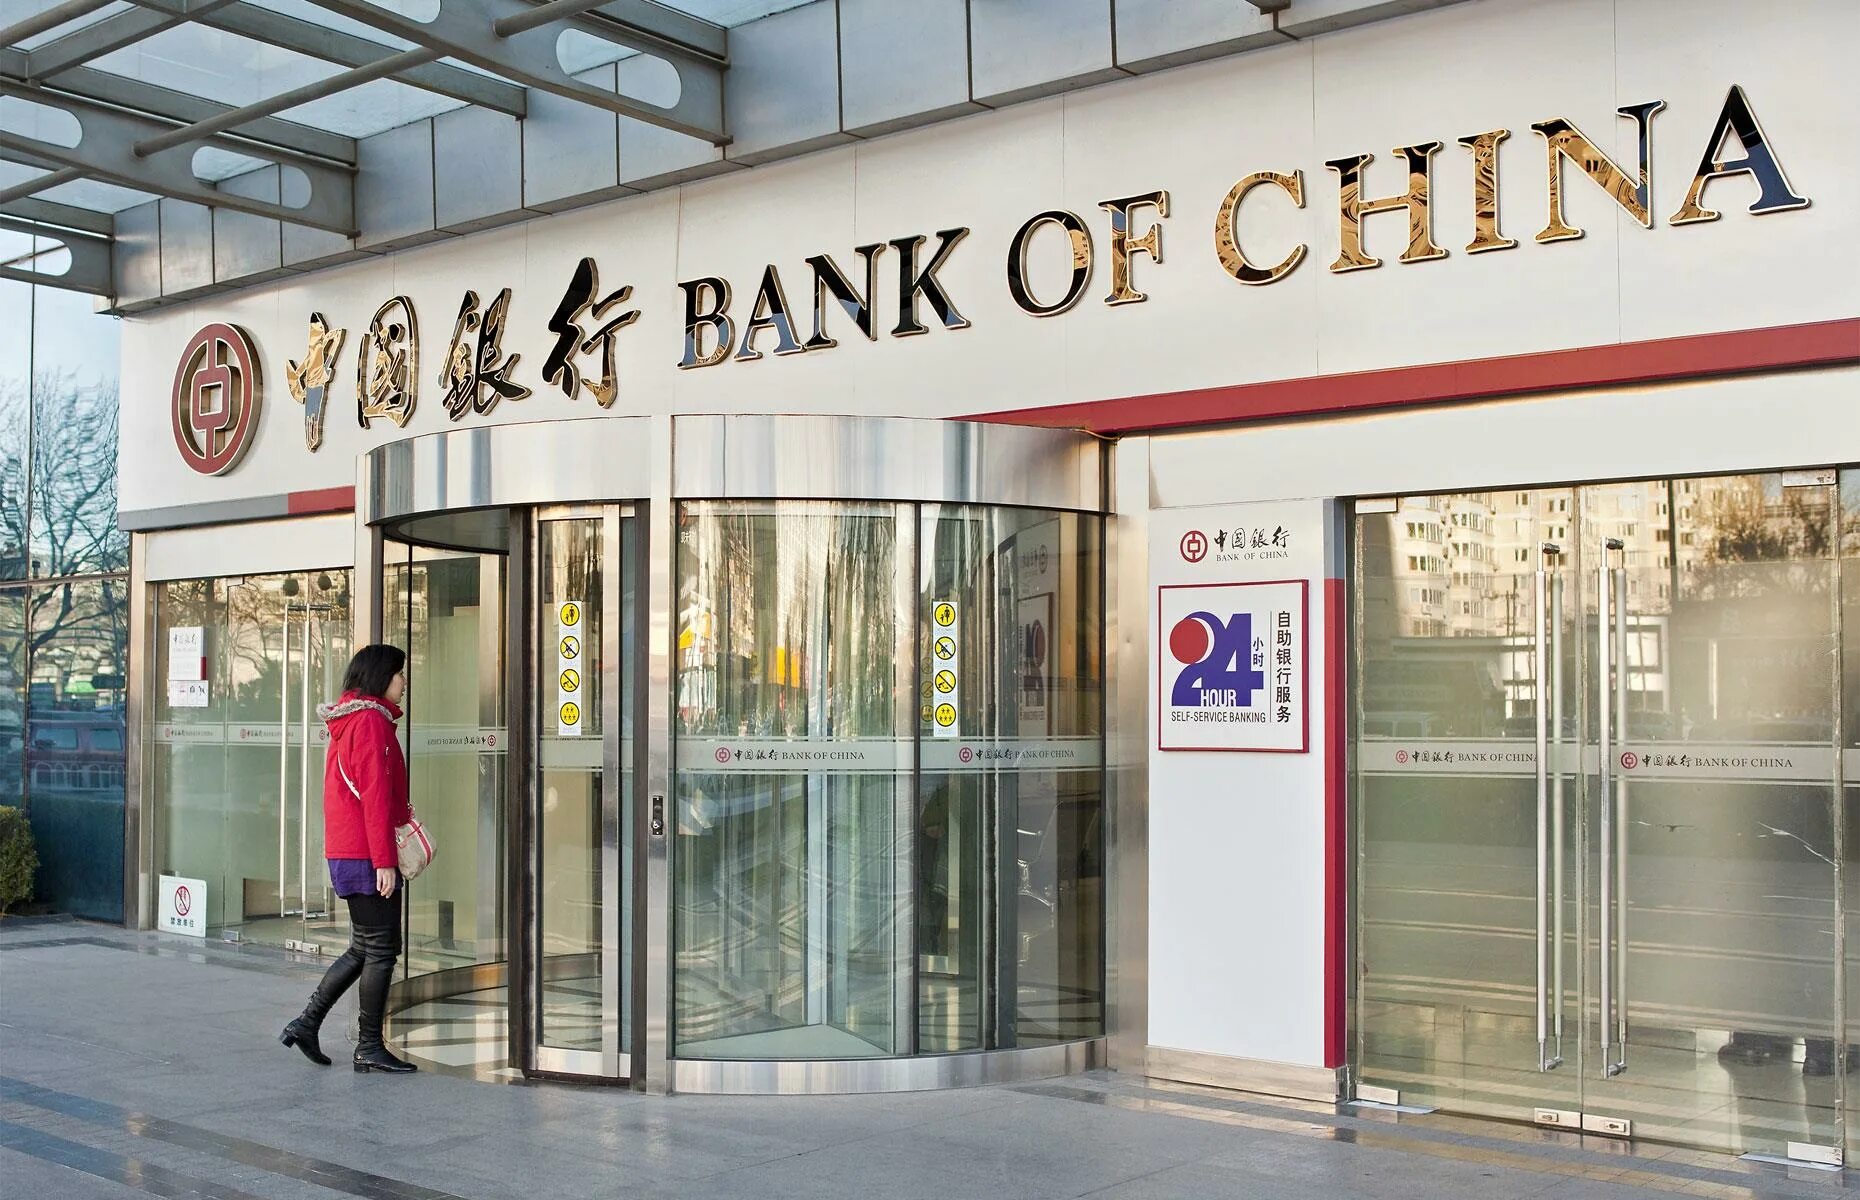 Банк Китая. Банк Bank of China. Банк Китая (boc). Bank of China в России. Bank of china russia